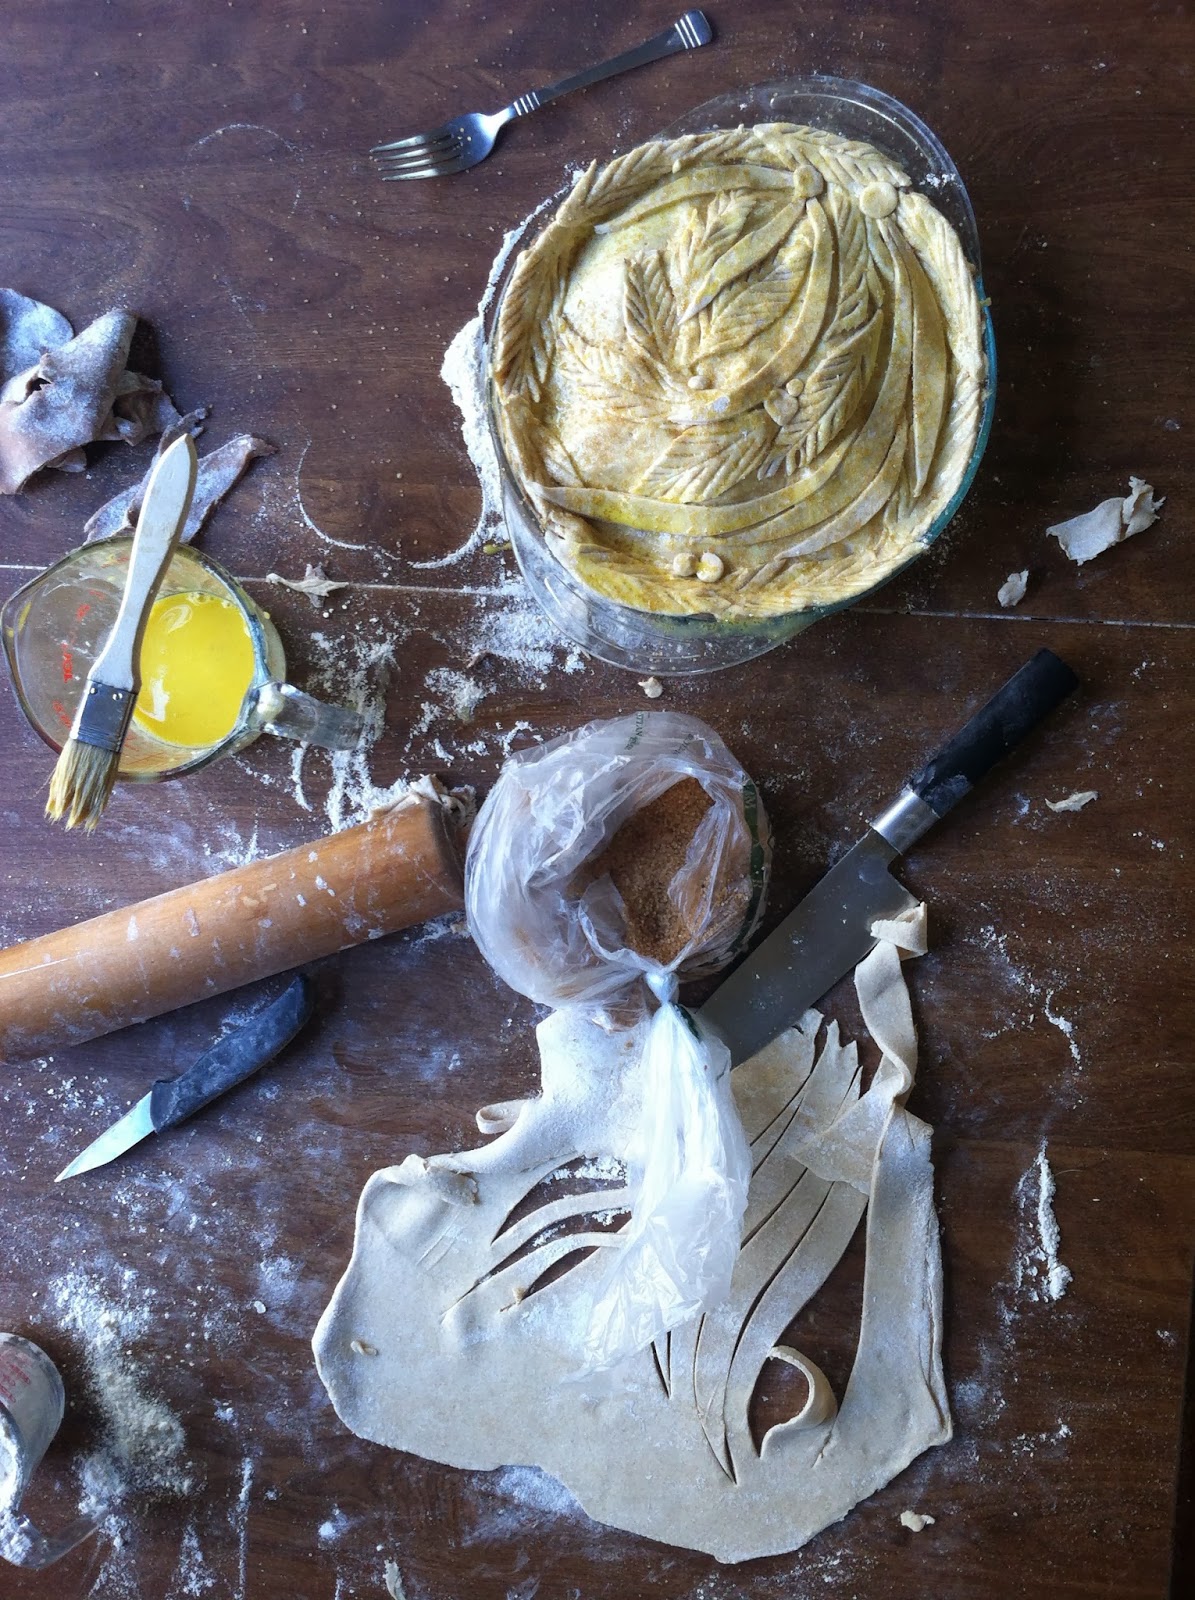 Decorative Pie Crust Tutorial by Tara Jensen of Smoke Signals Baking